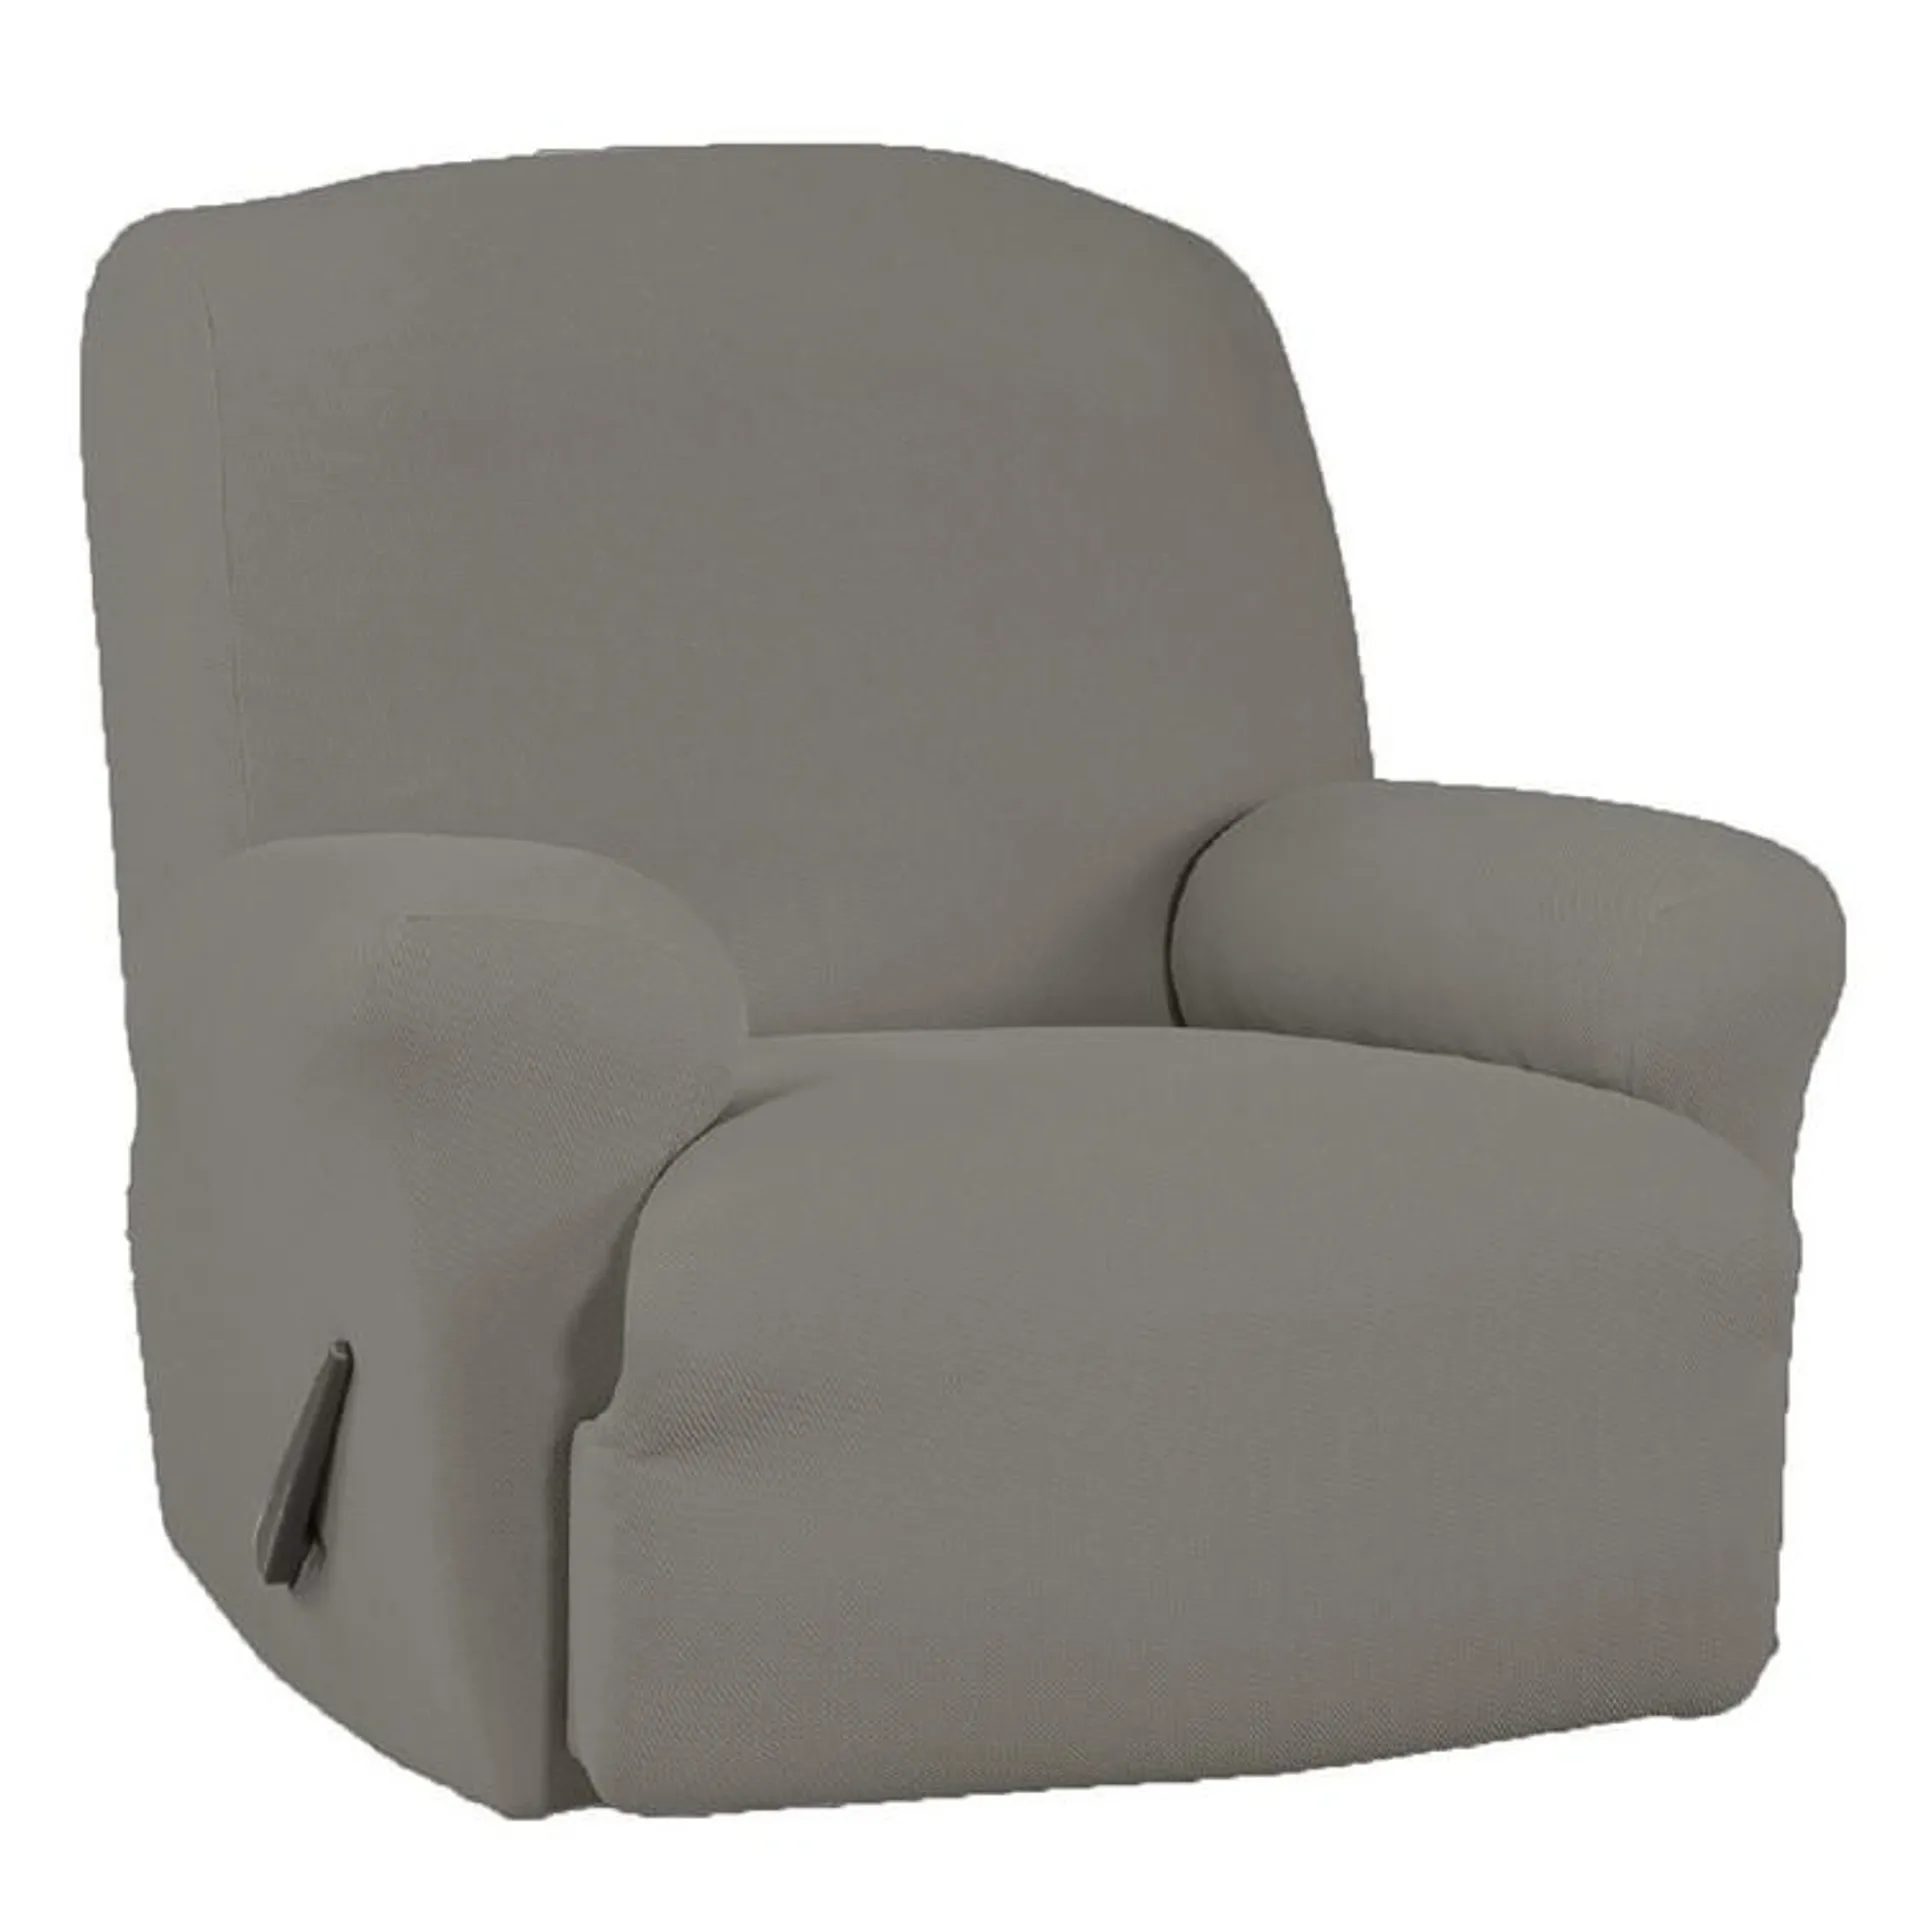 Ardor Ashton Recliner Couch Cover Cement